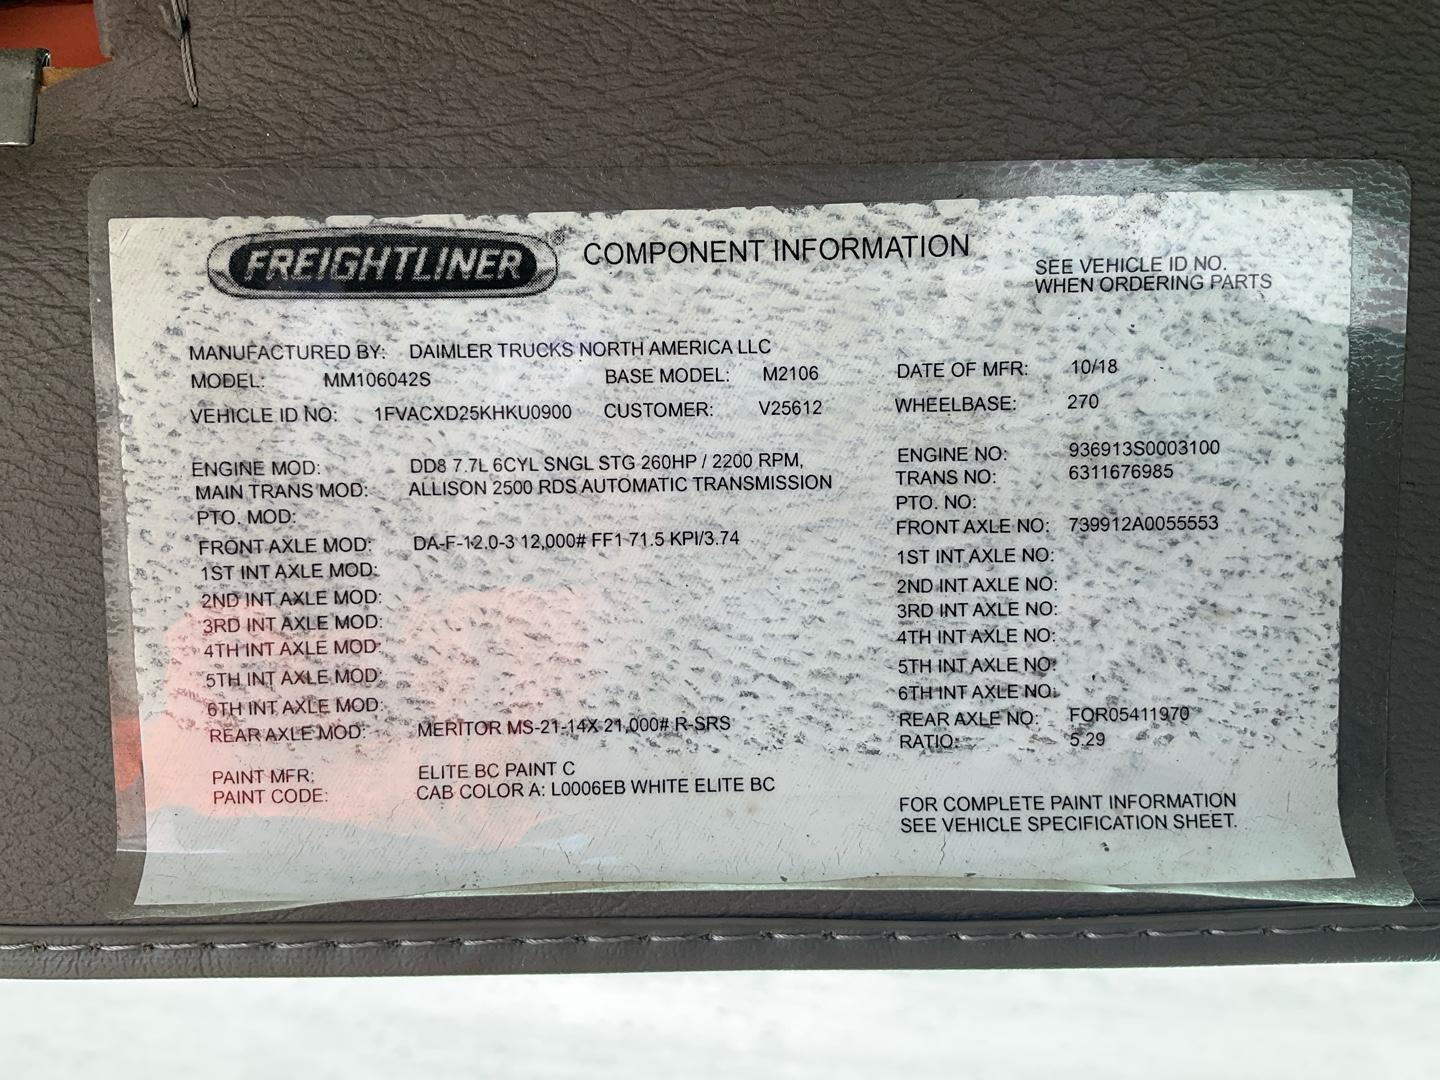 2019 FREIGHTLINER M2-106 Serial Number: 1FVACXD25KHKU0900